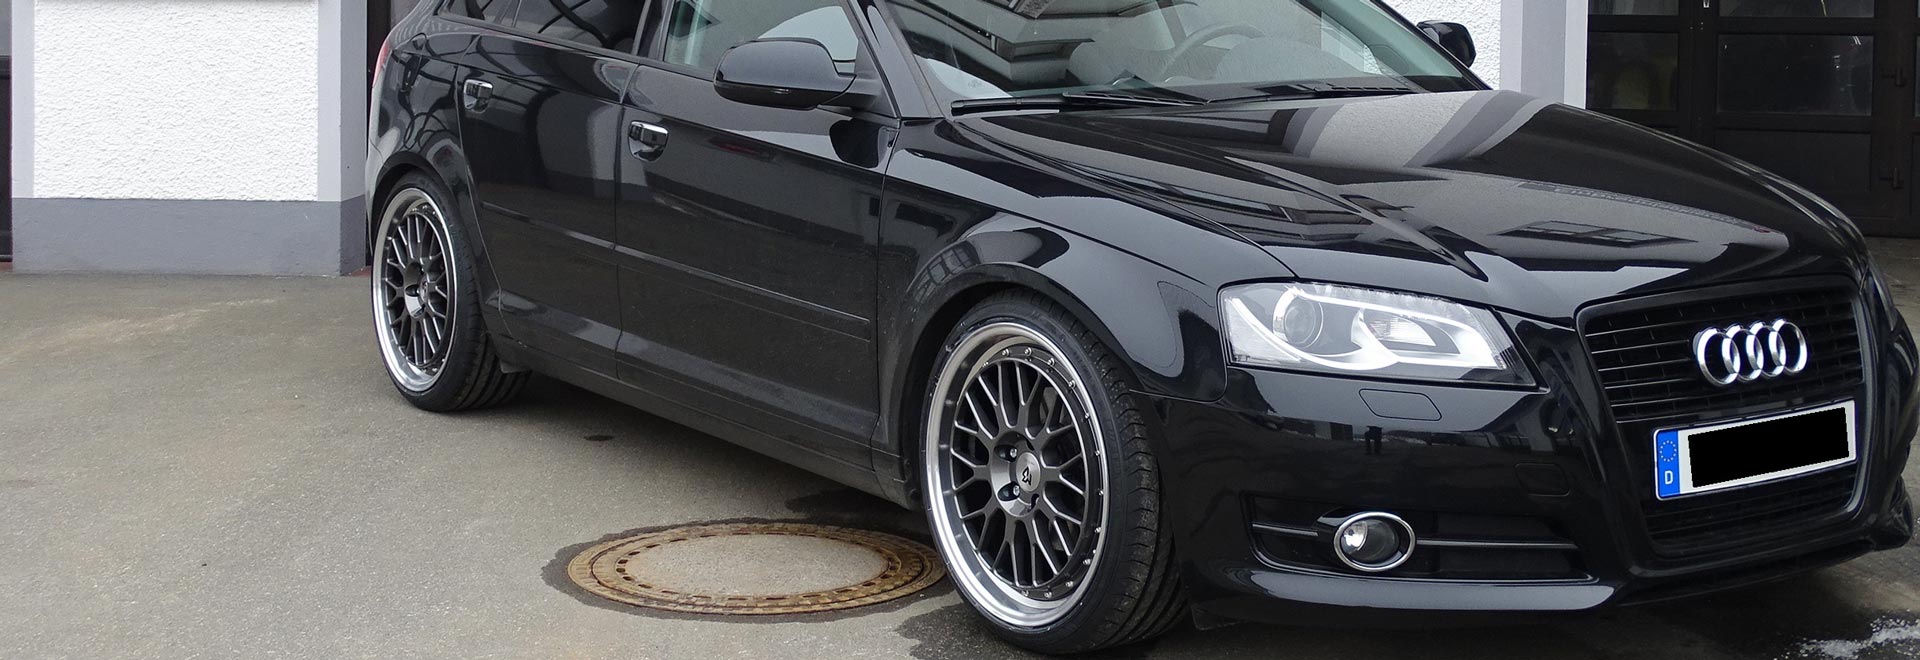 schwarzer Audi